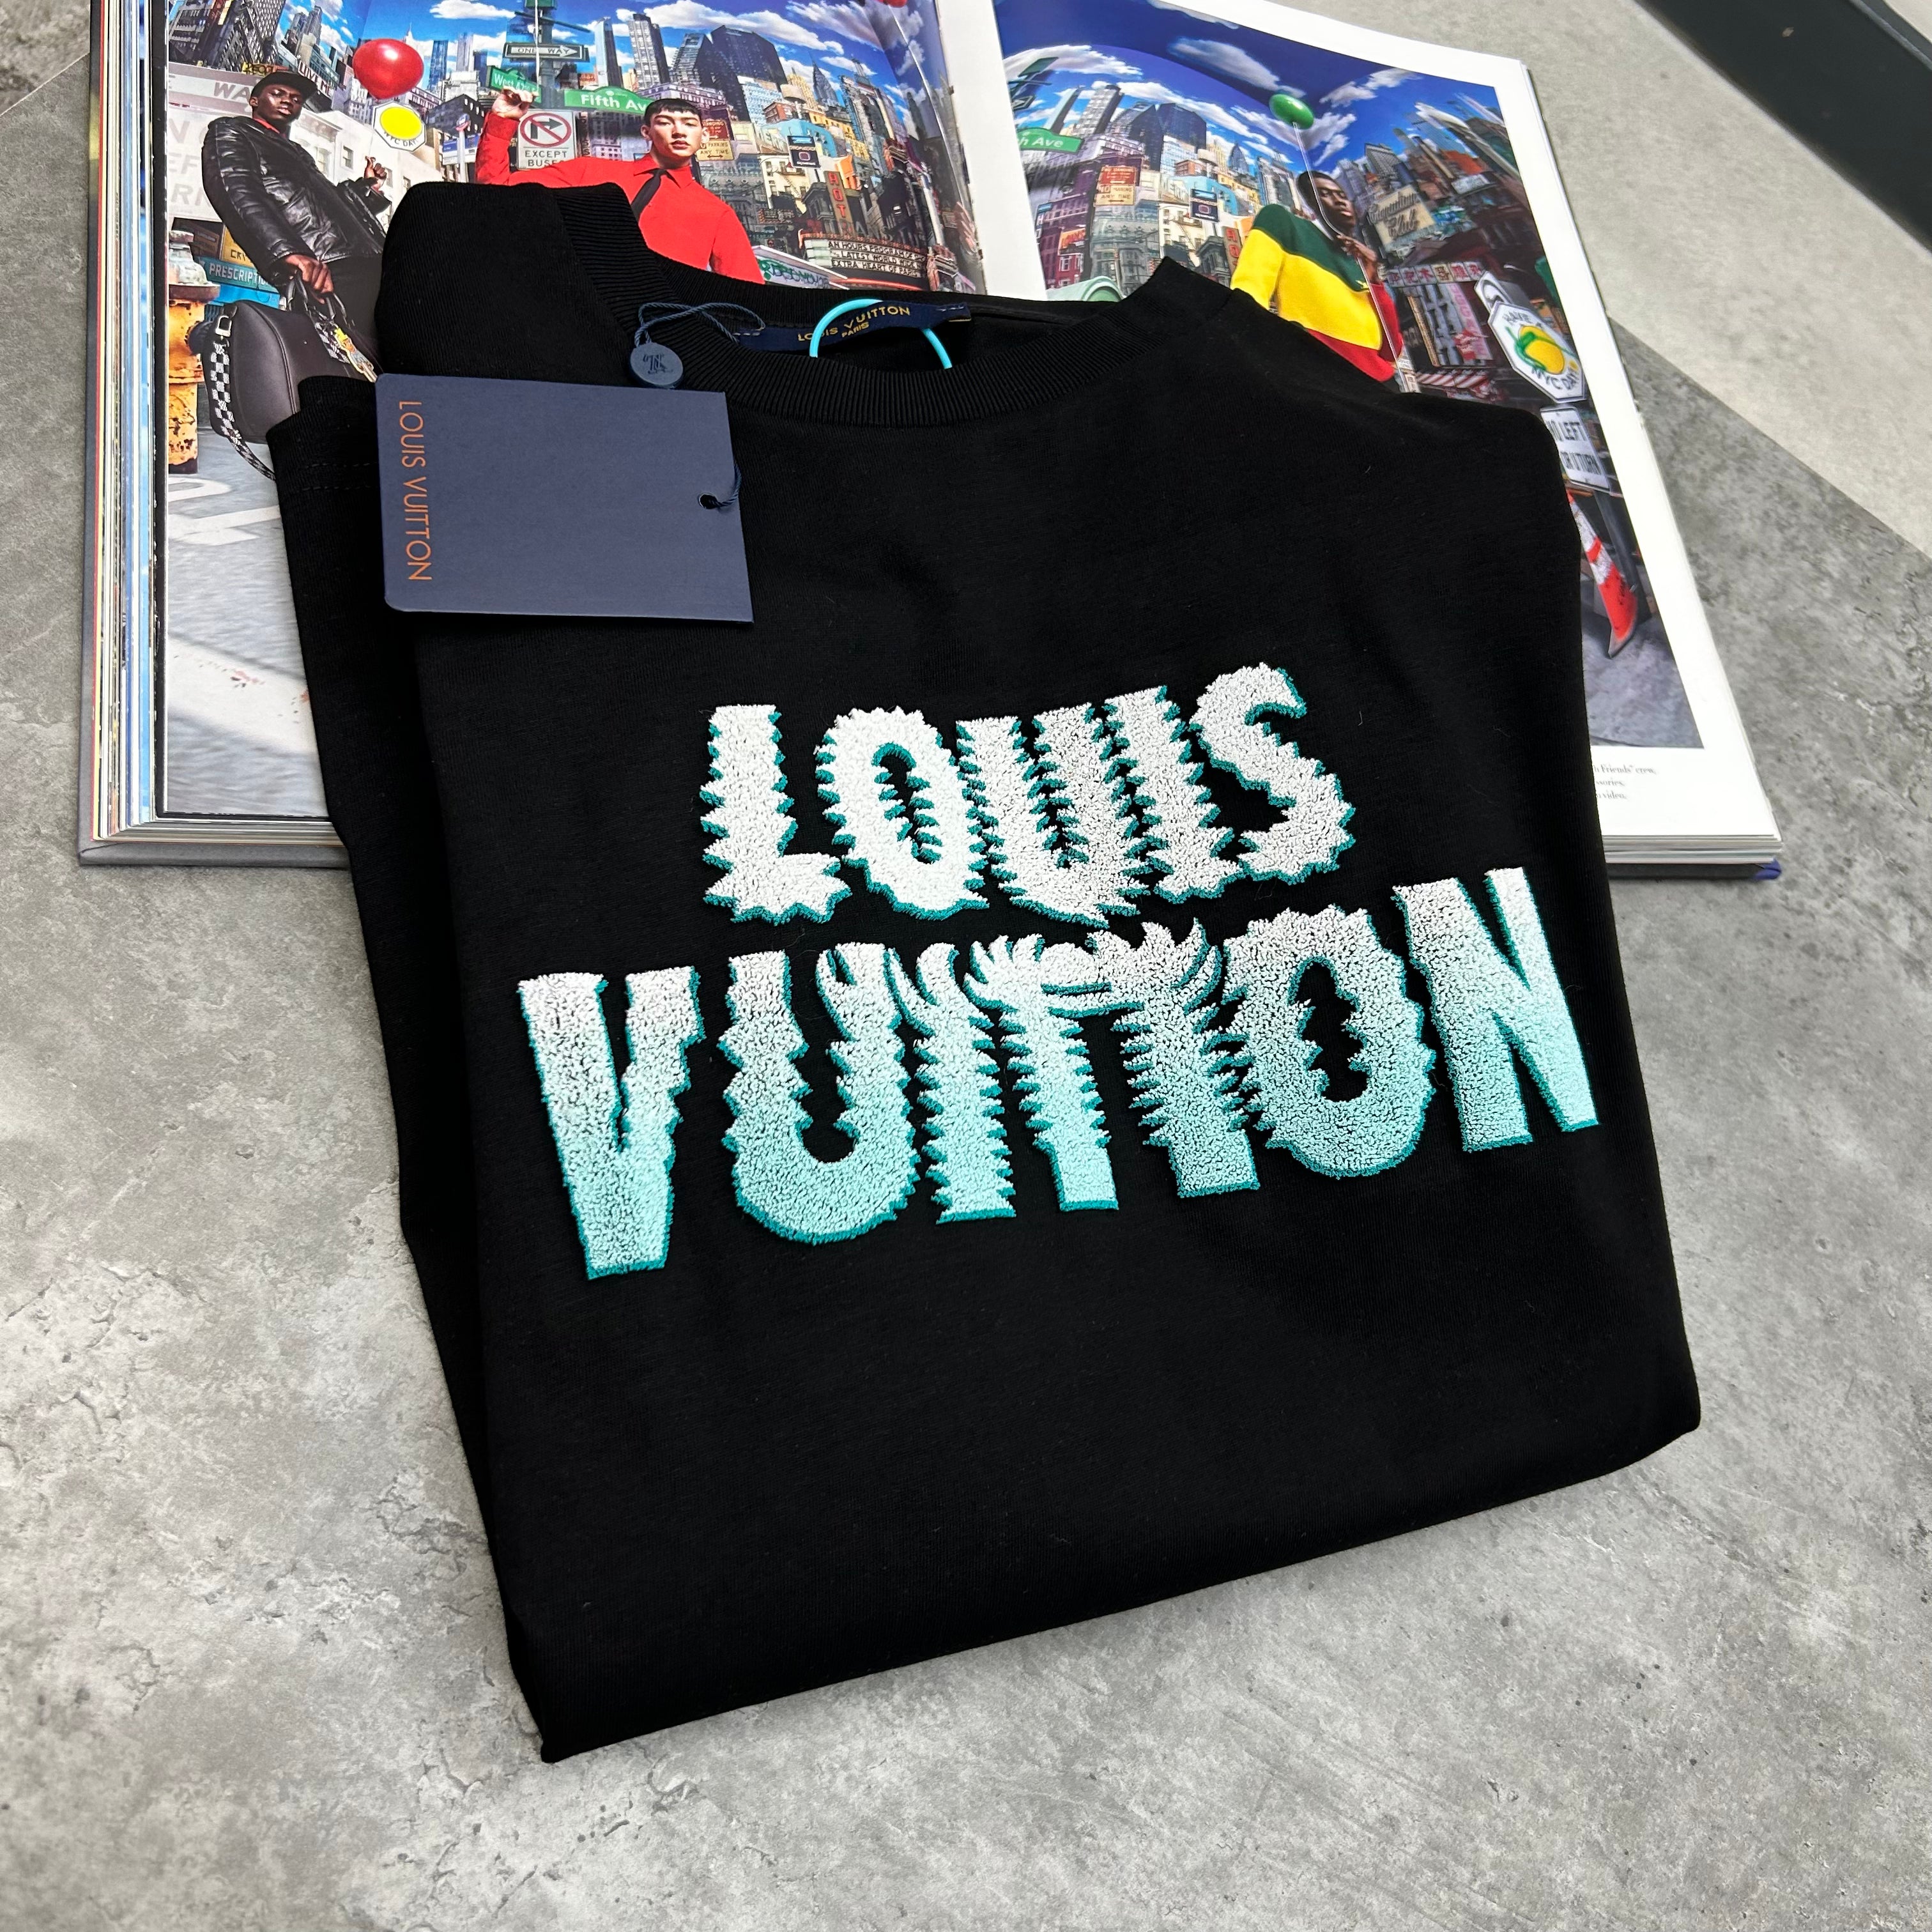 Louis Vuitton Water Monogram Board Shorts (1A8WSM)